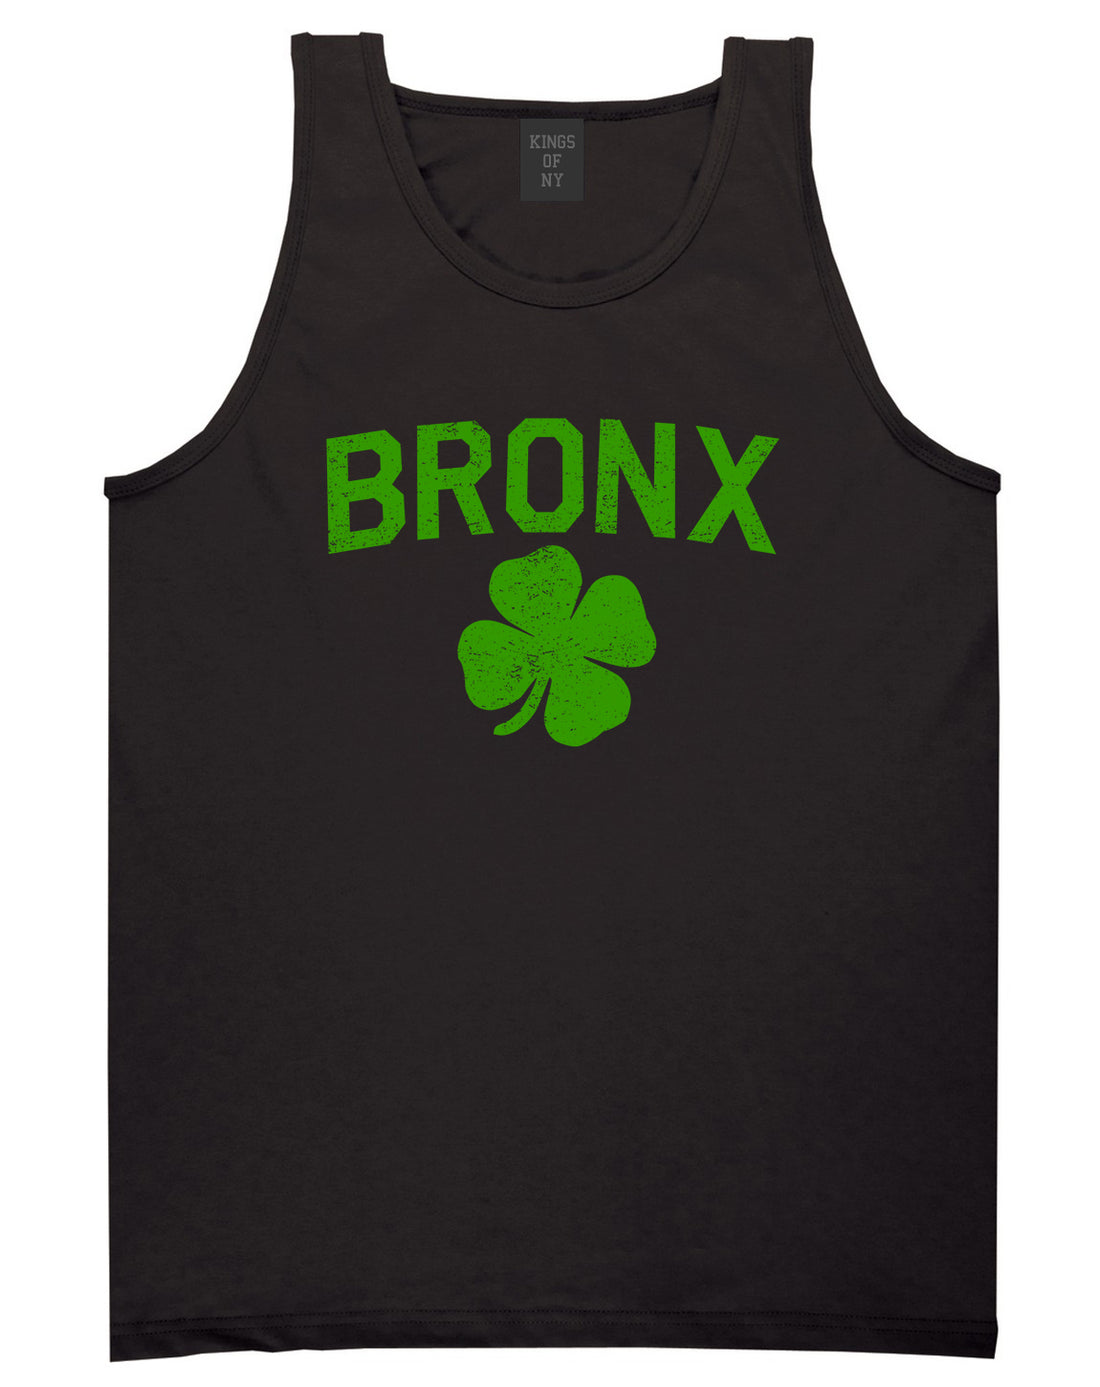 The Bronx Irish St Patricks Day Mens Tank Top T-Shirt Black